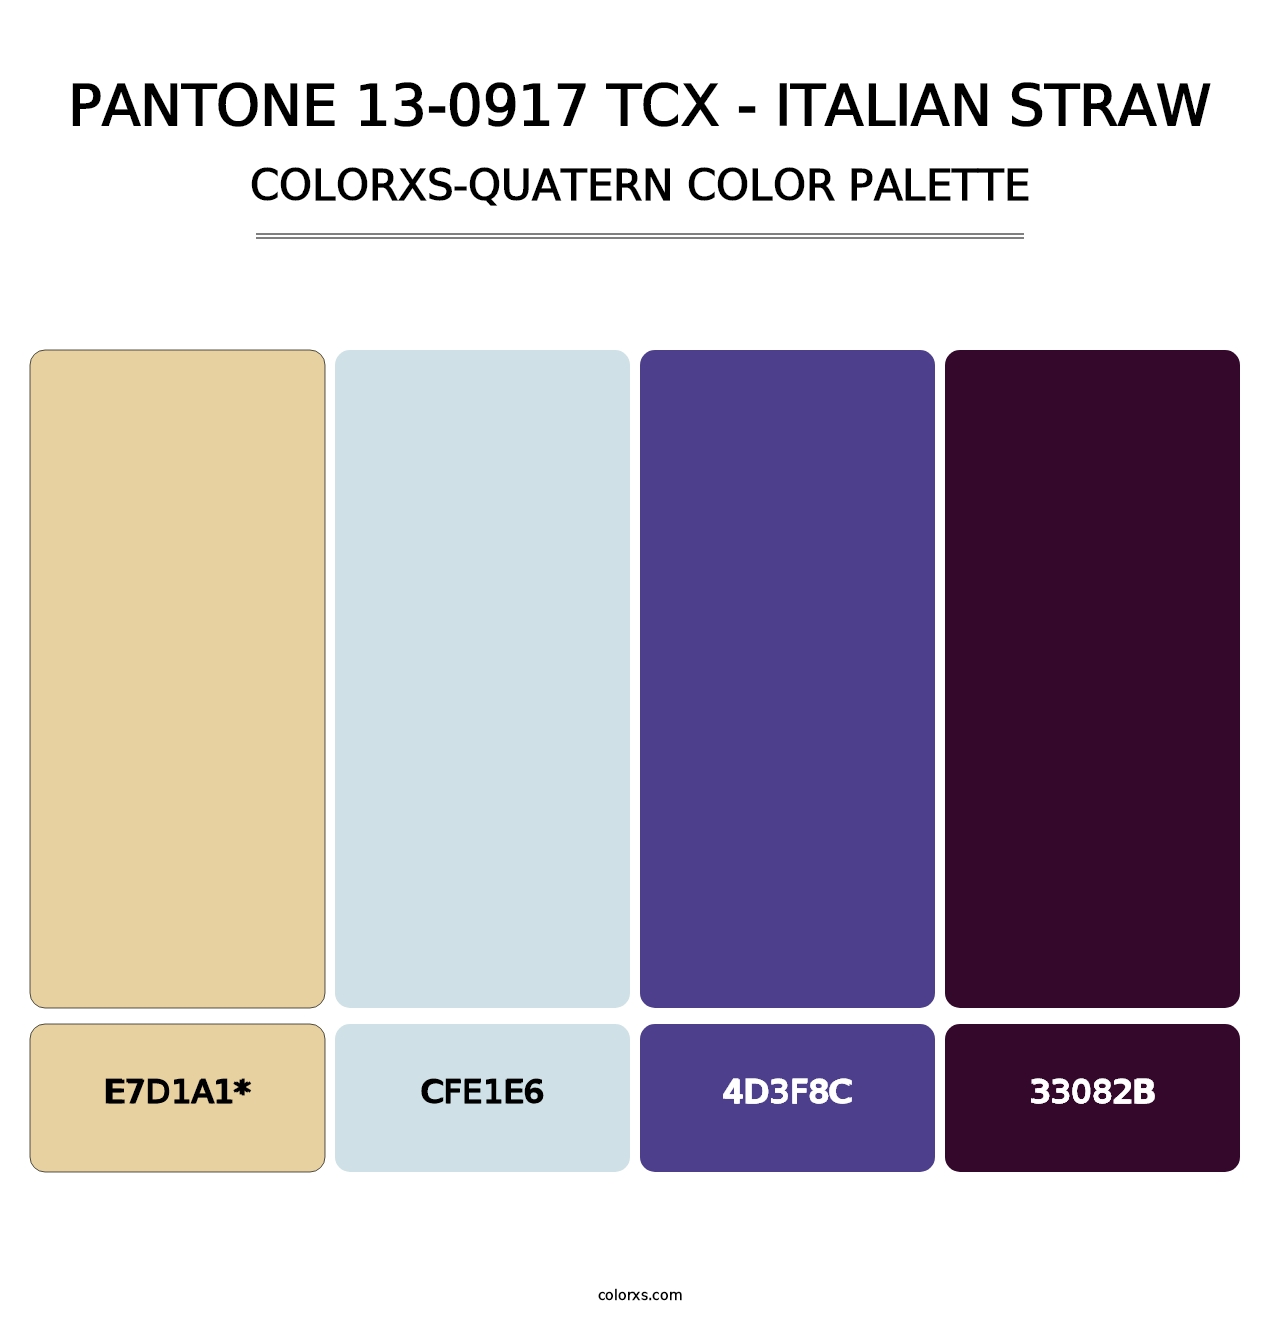 PANTONE 13-0917 TCX - Italian Straw - Colorxs Quatern Palette